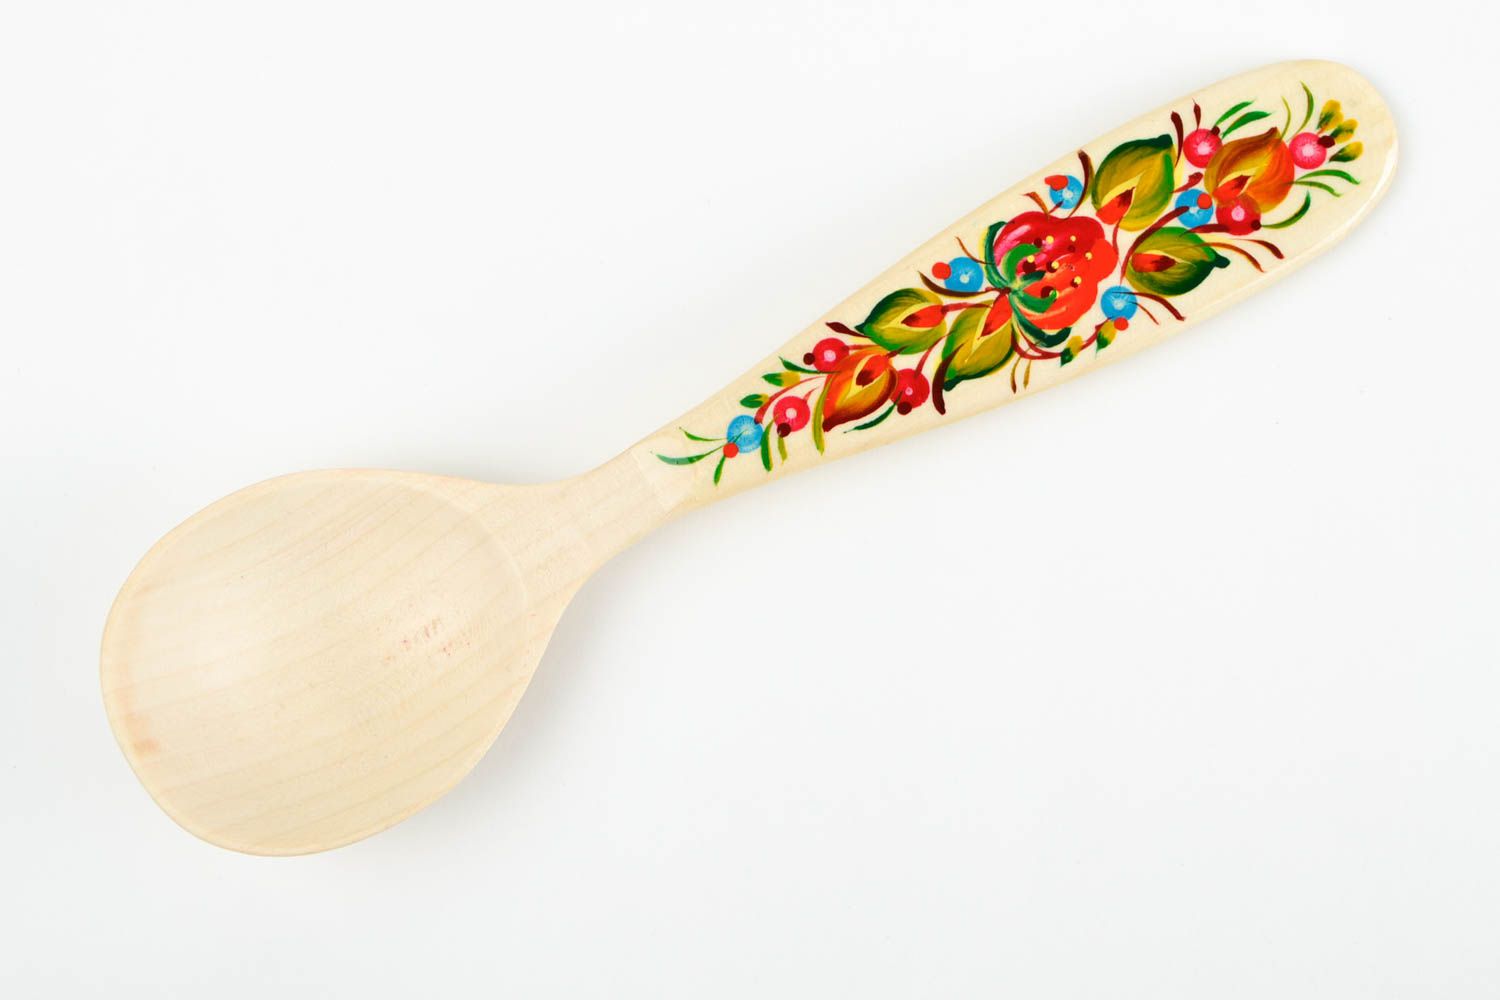 Handmade spoon unusual spoon for kitchen decor decor ideas unusual gift photo 3